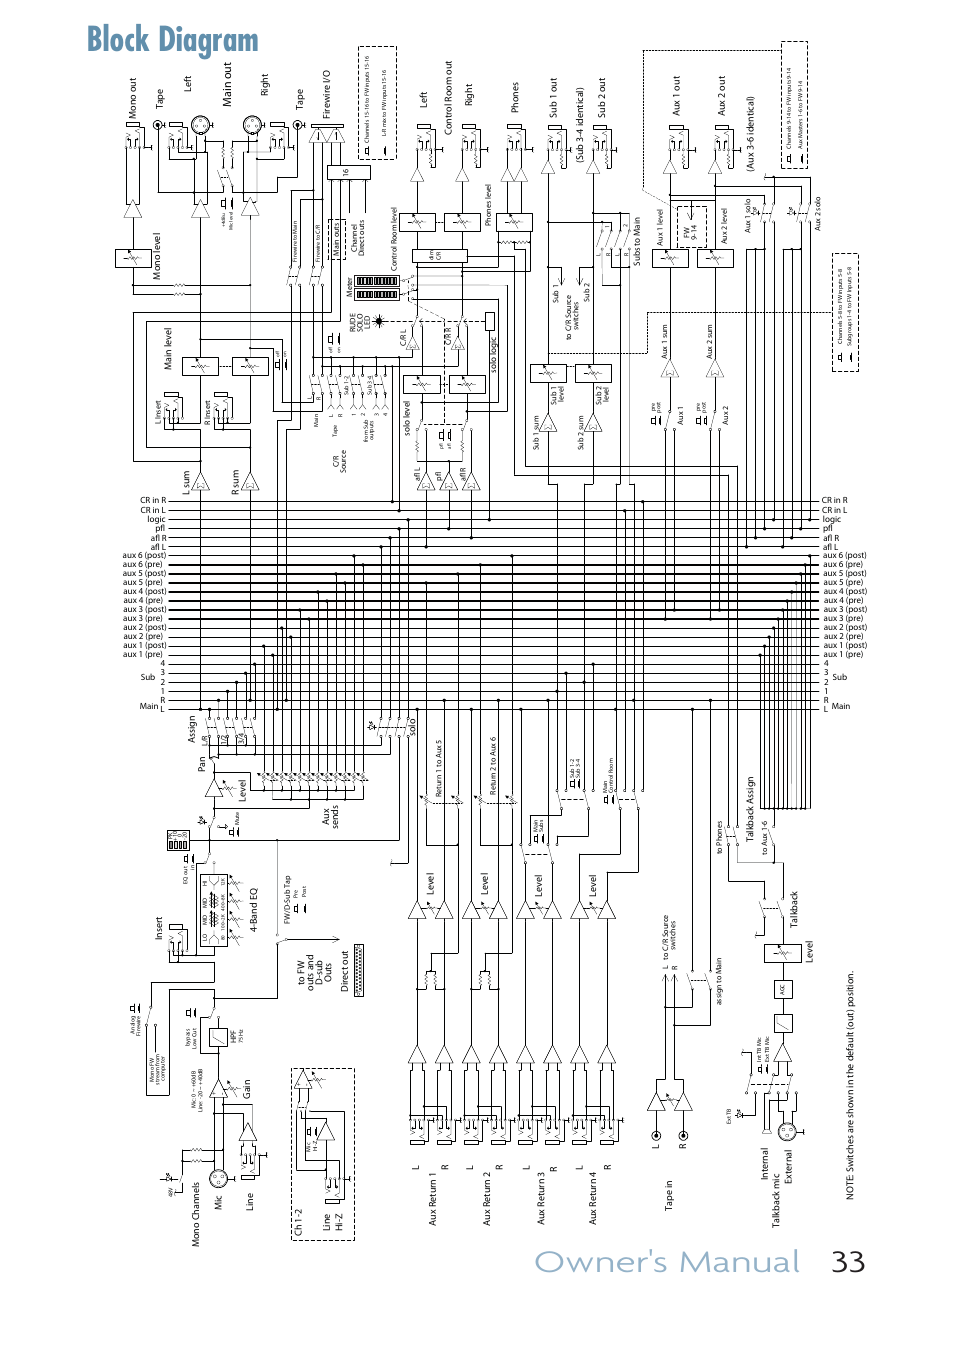 Block diagram, Owner's manual 33, Main out | MACKIE ONYX 1640I User Manual  | Page 33 / 50 | Original mode